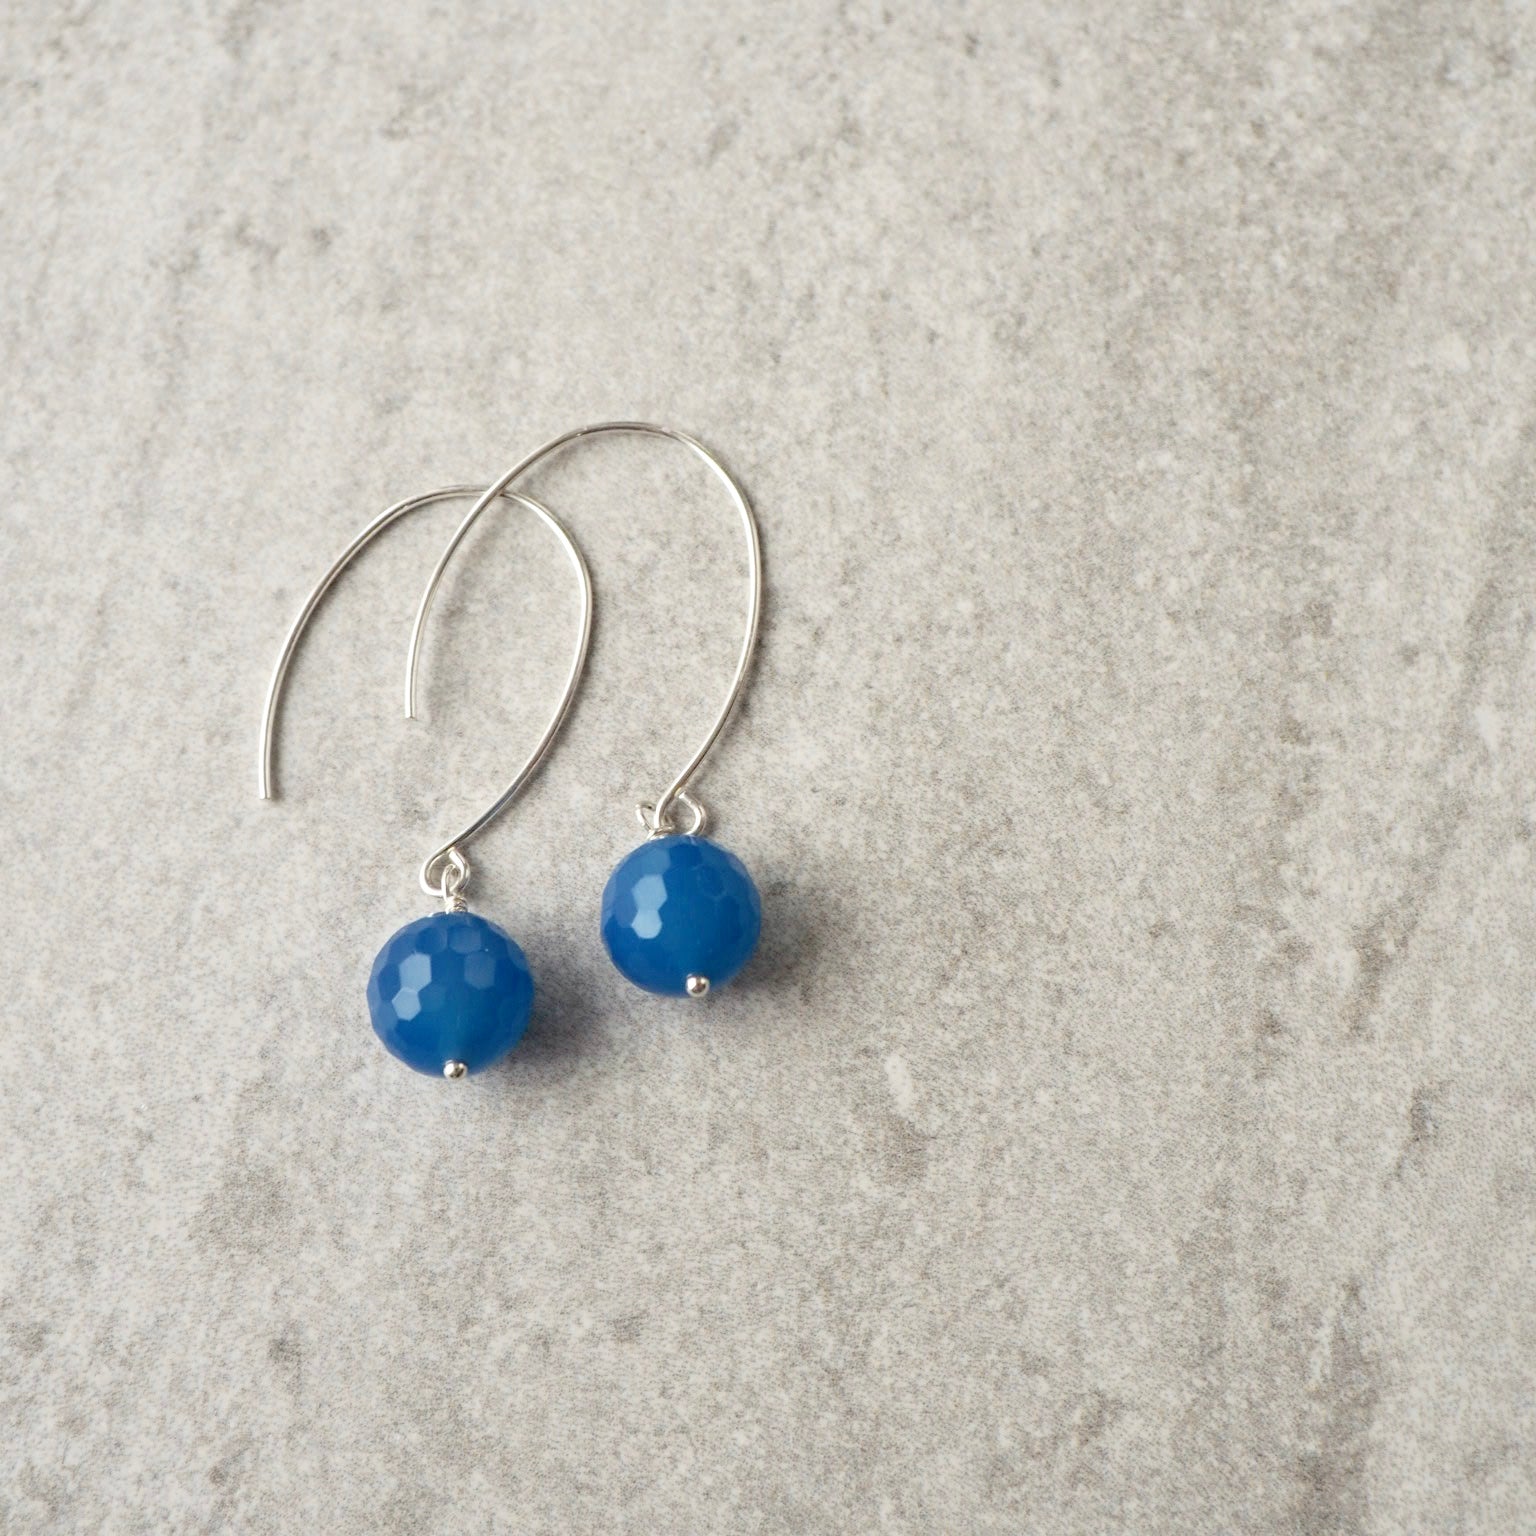 Blue Agate Modern Earrings made in Canada by Wallis Designs